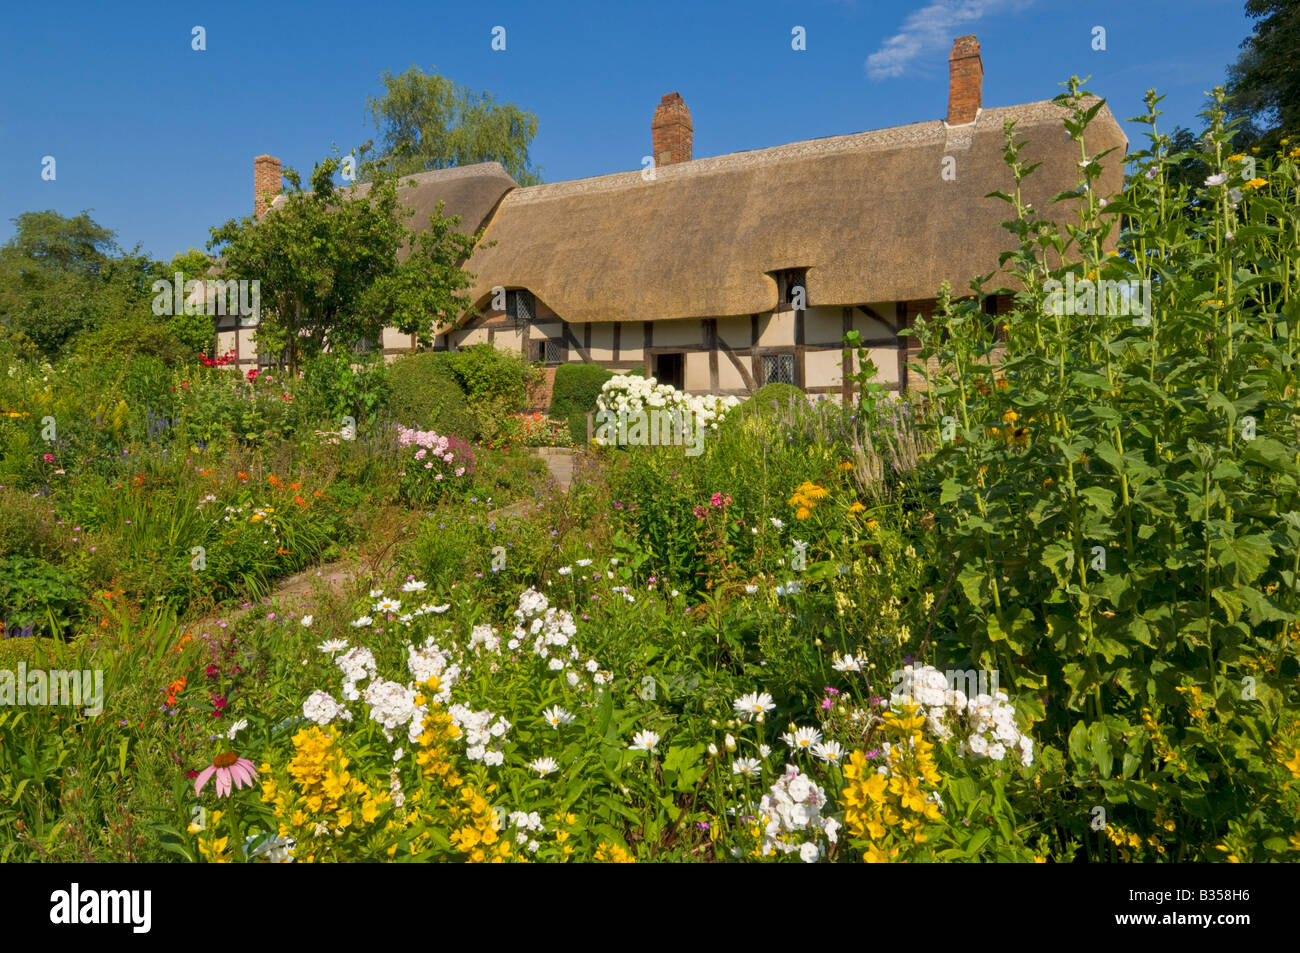 Anne Hathaway's thatched cottage Shottery near Stratford upon Avon Warwickshire England UK GB EU Europe Stock Photo